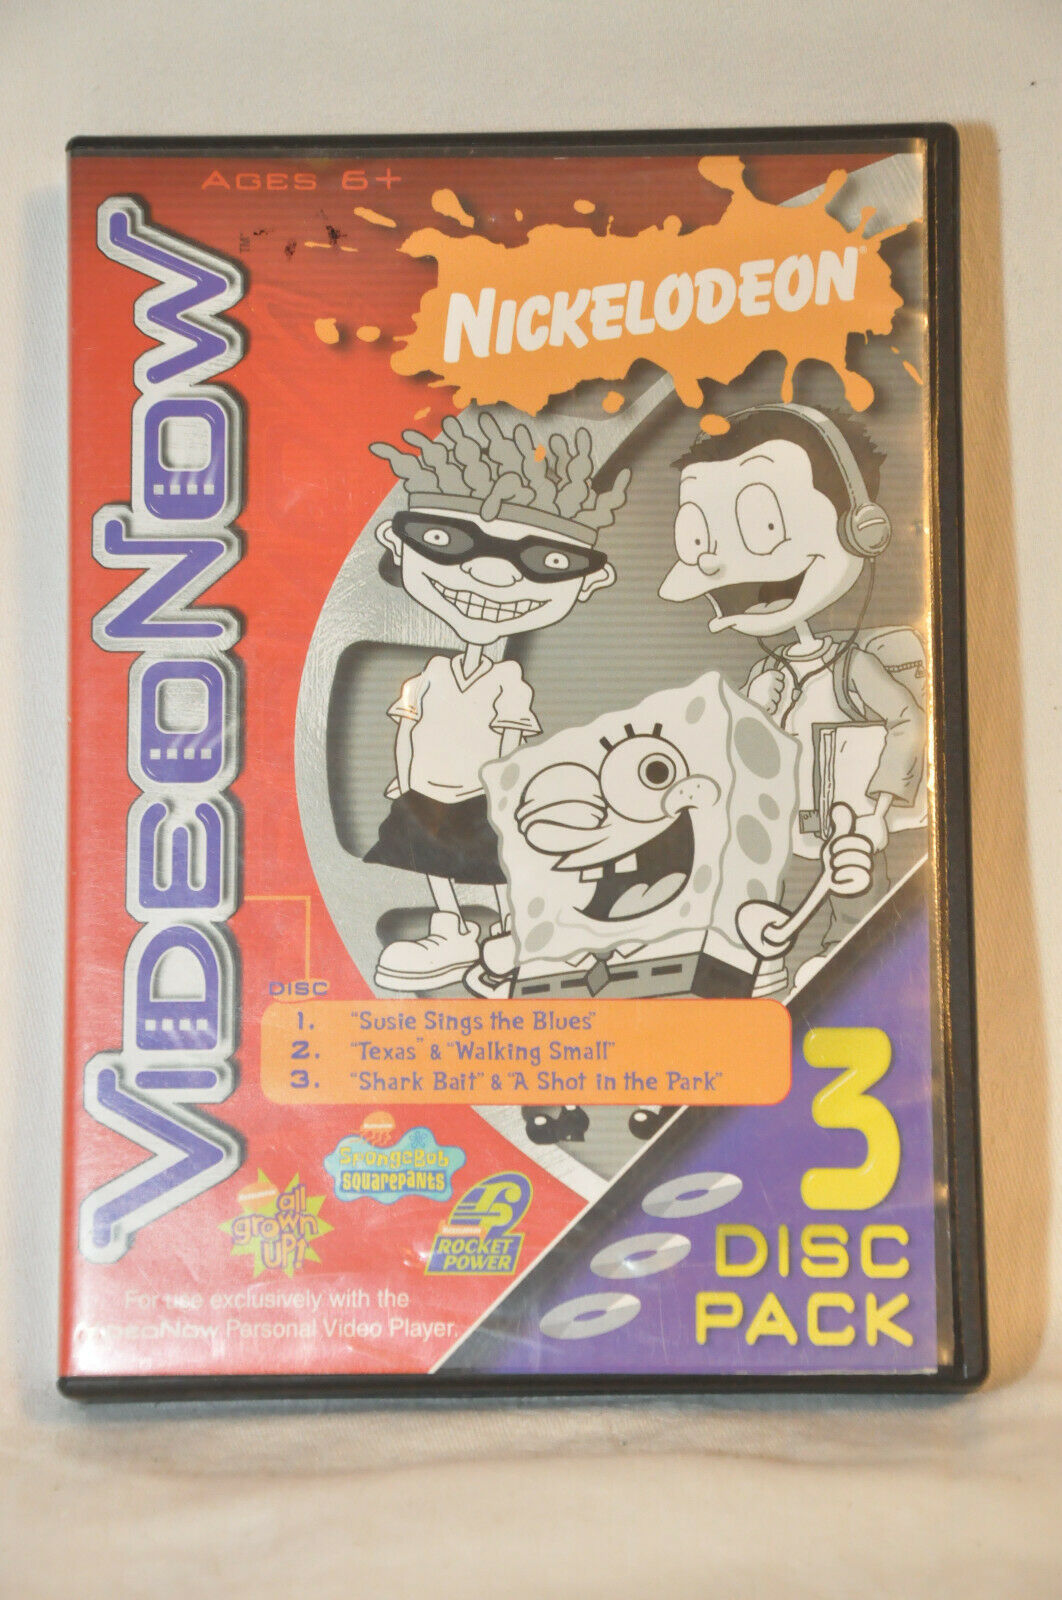 Video Now Personal Video Nickelodeon 3 Disc Pack Spongebob Rocket Power Rugrats